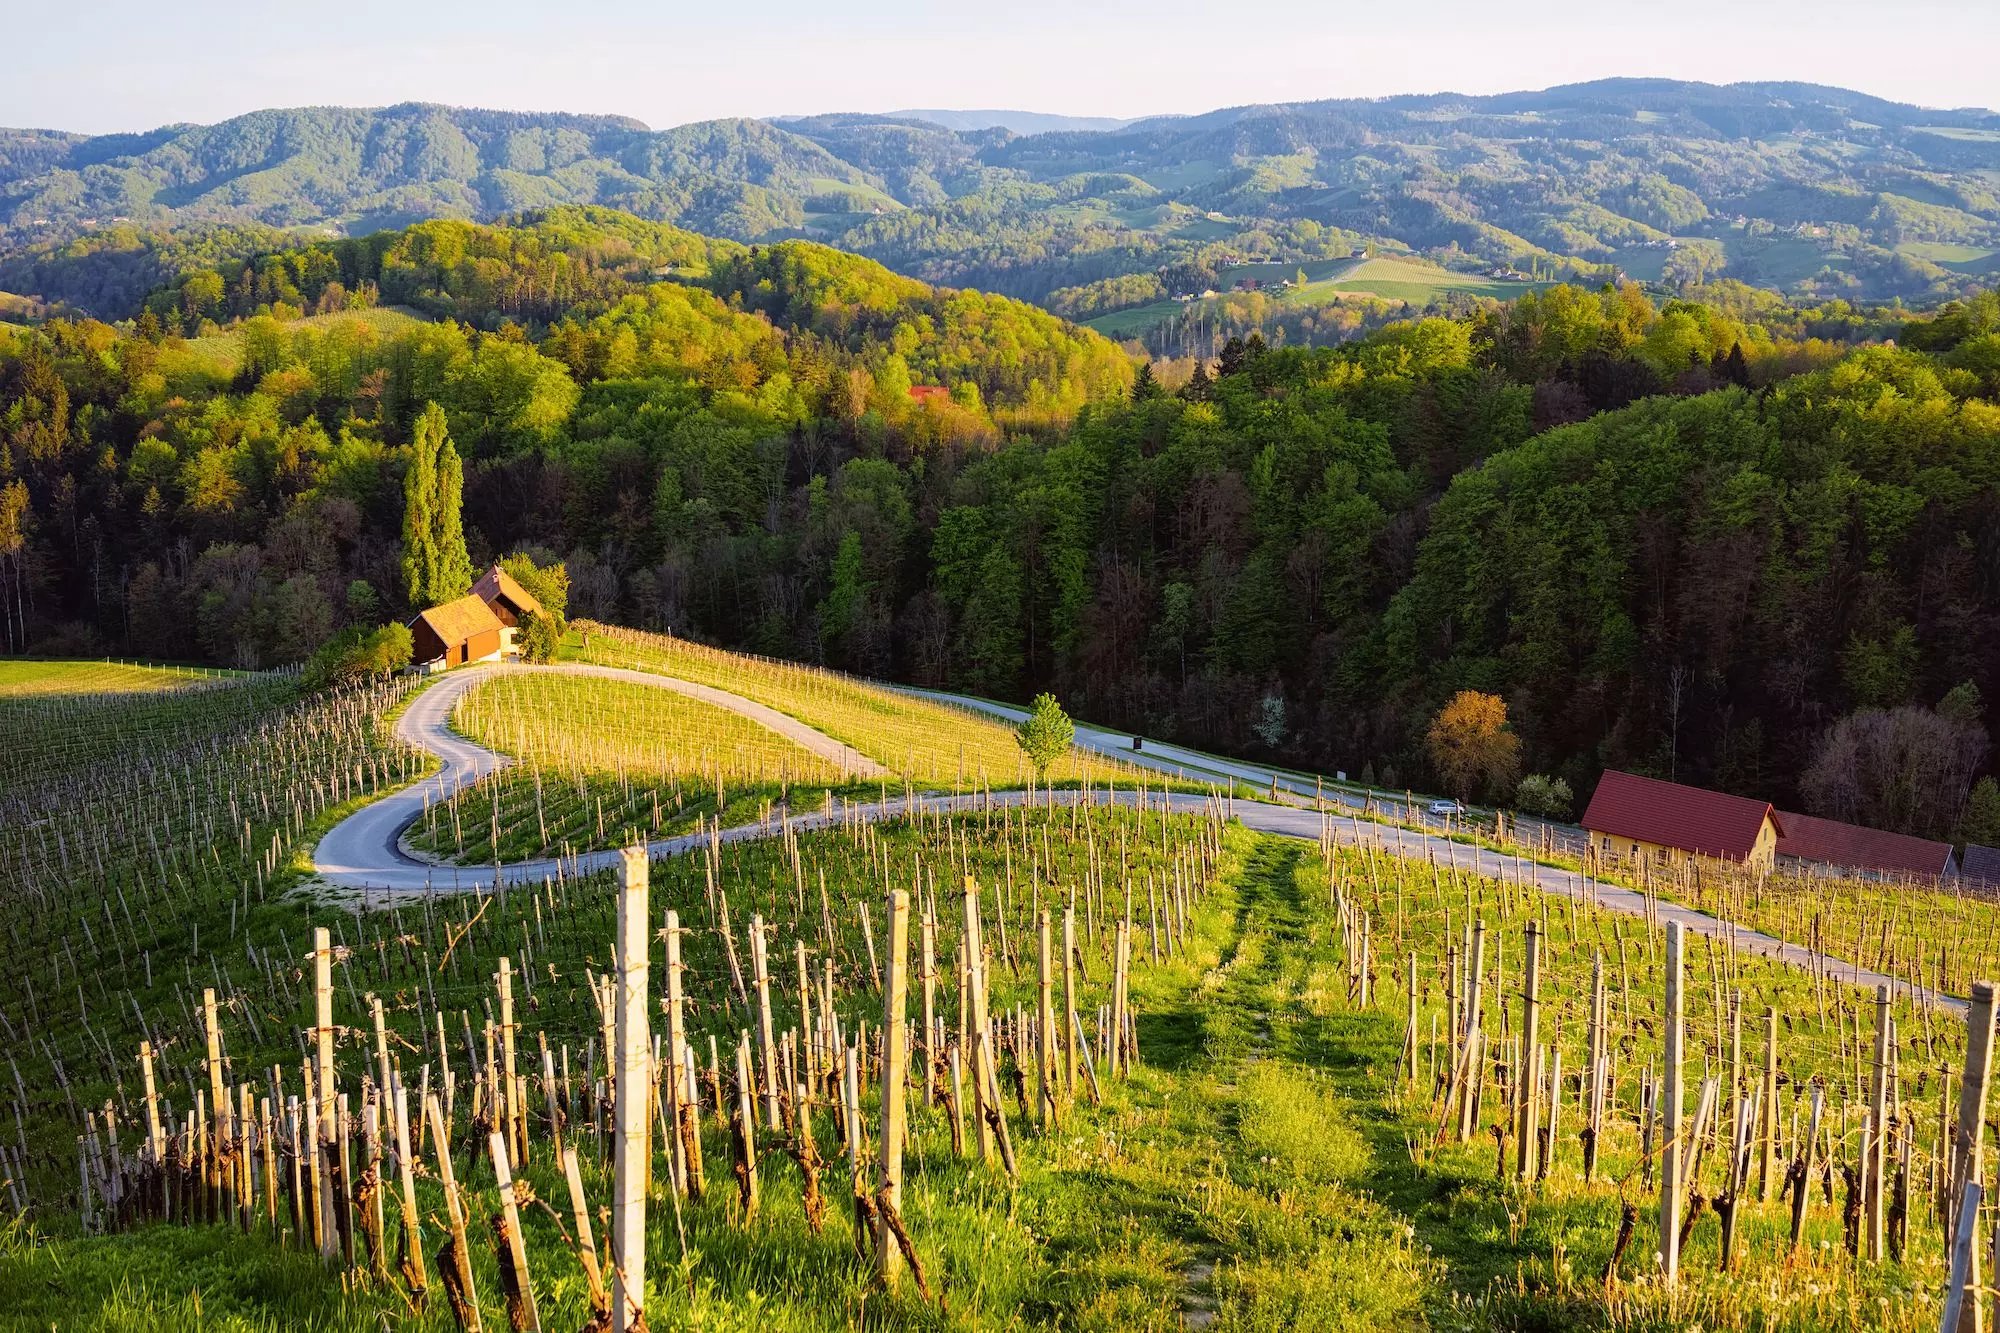 Spicnik, a szív alakú út - Szlovénia Kisokos